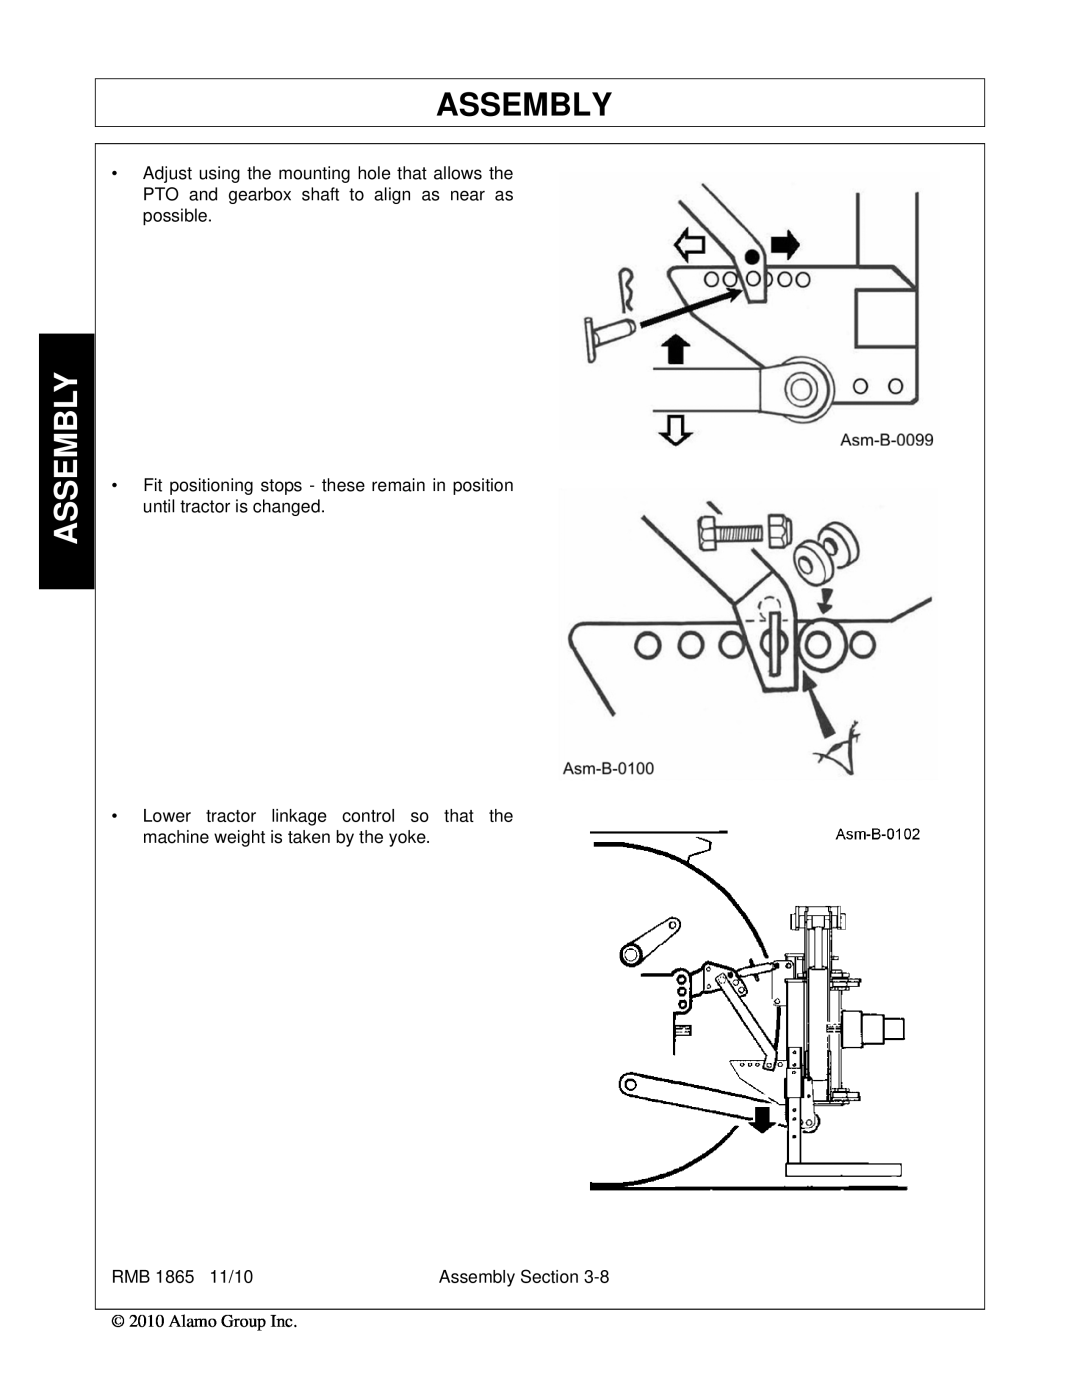 Bush Hog RMB 1865 manual Assembly 